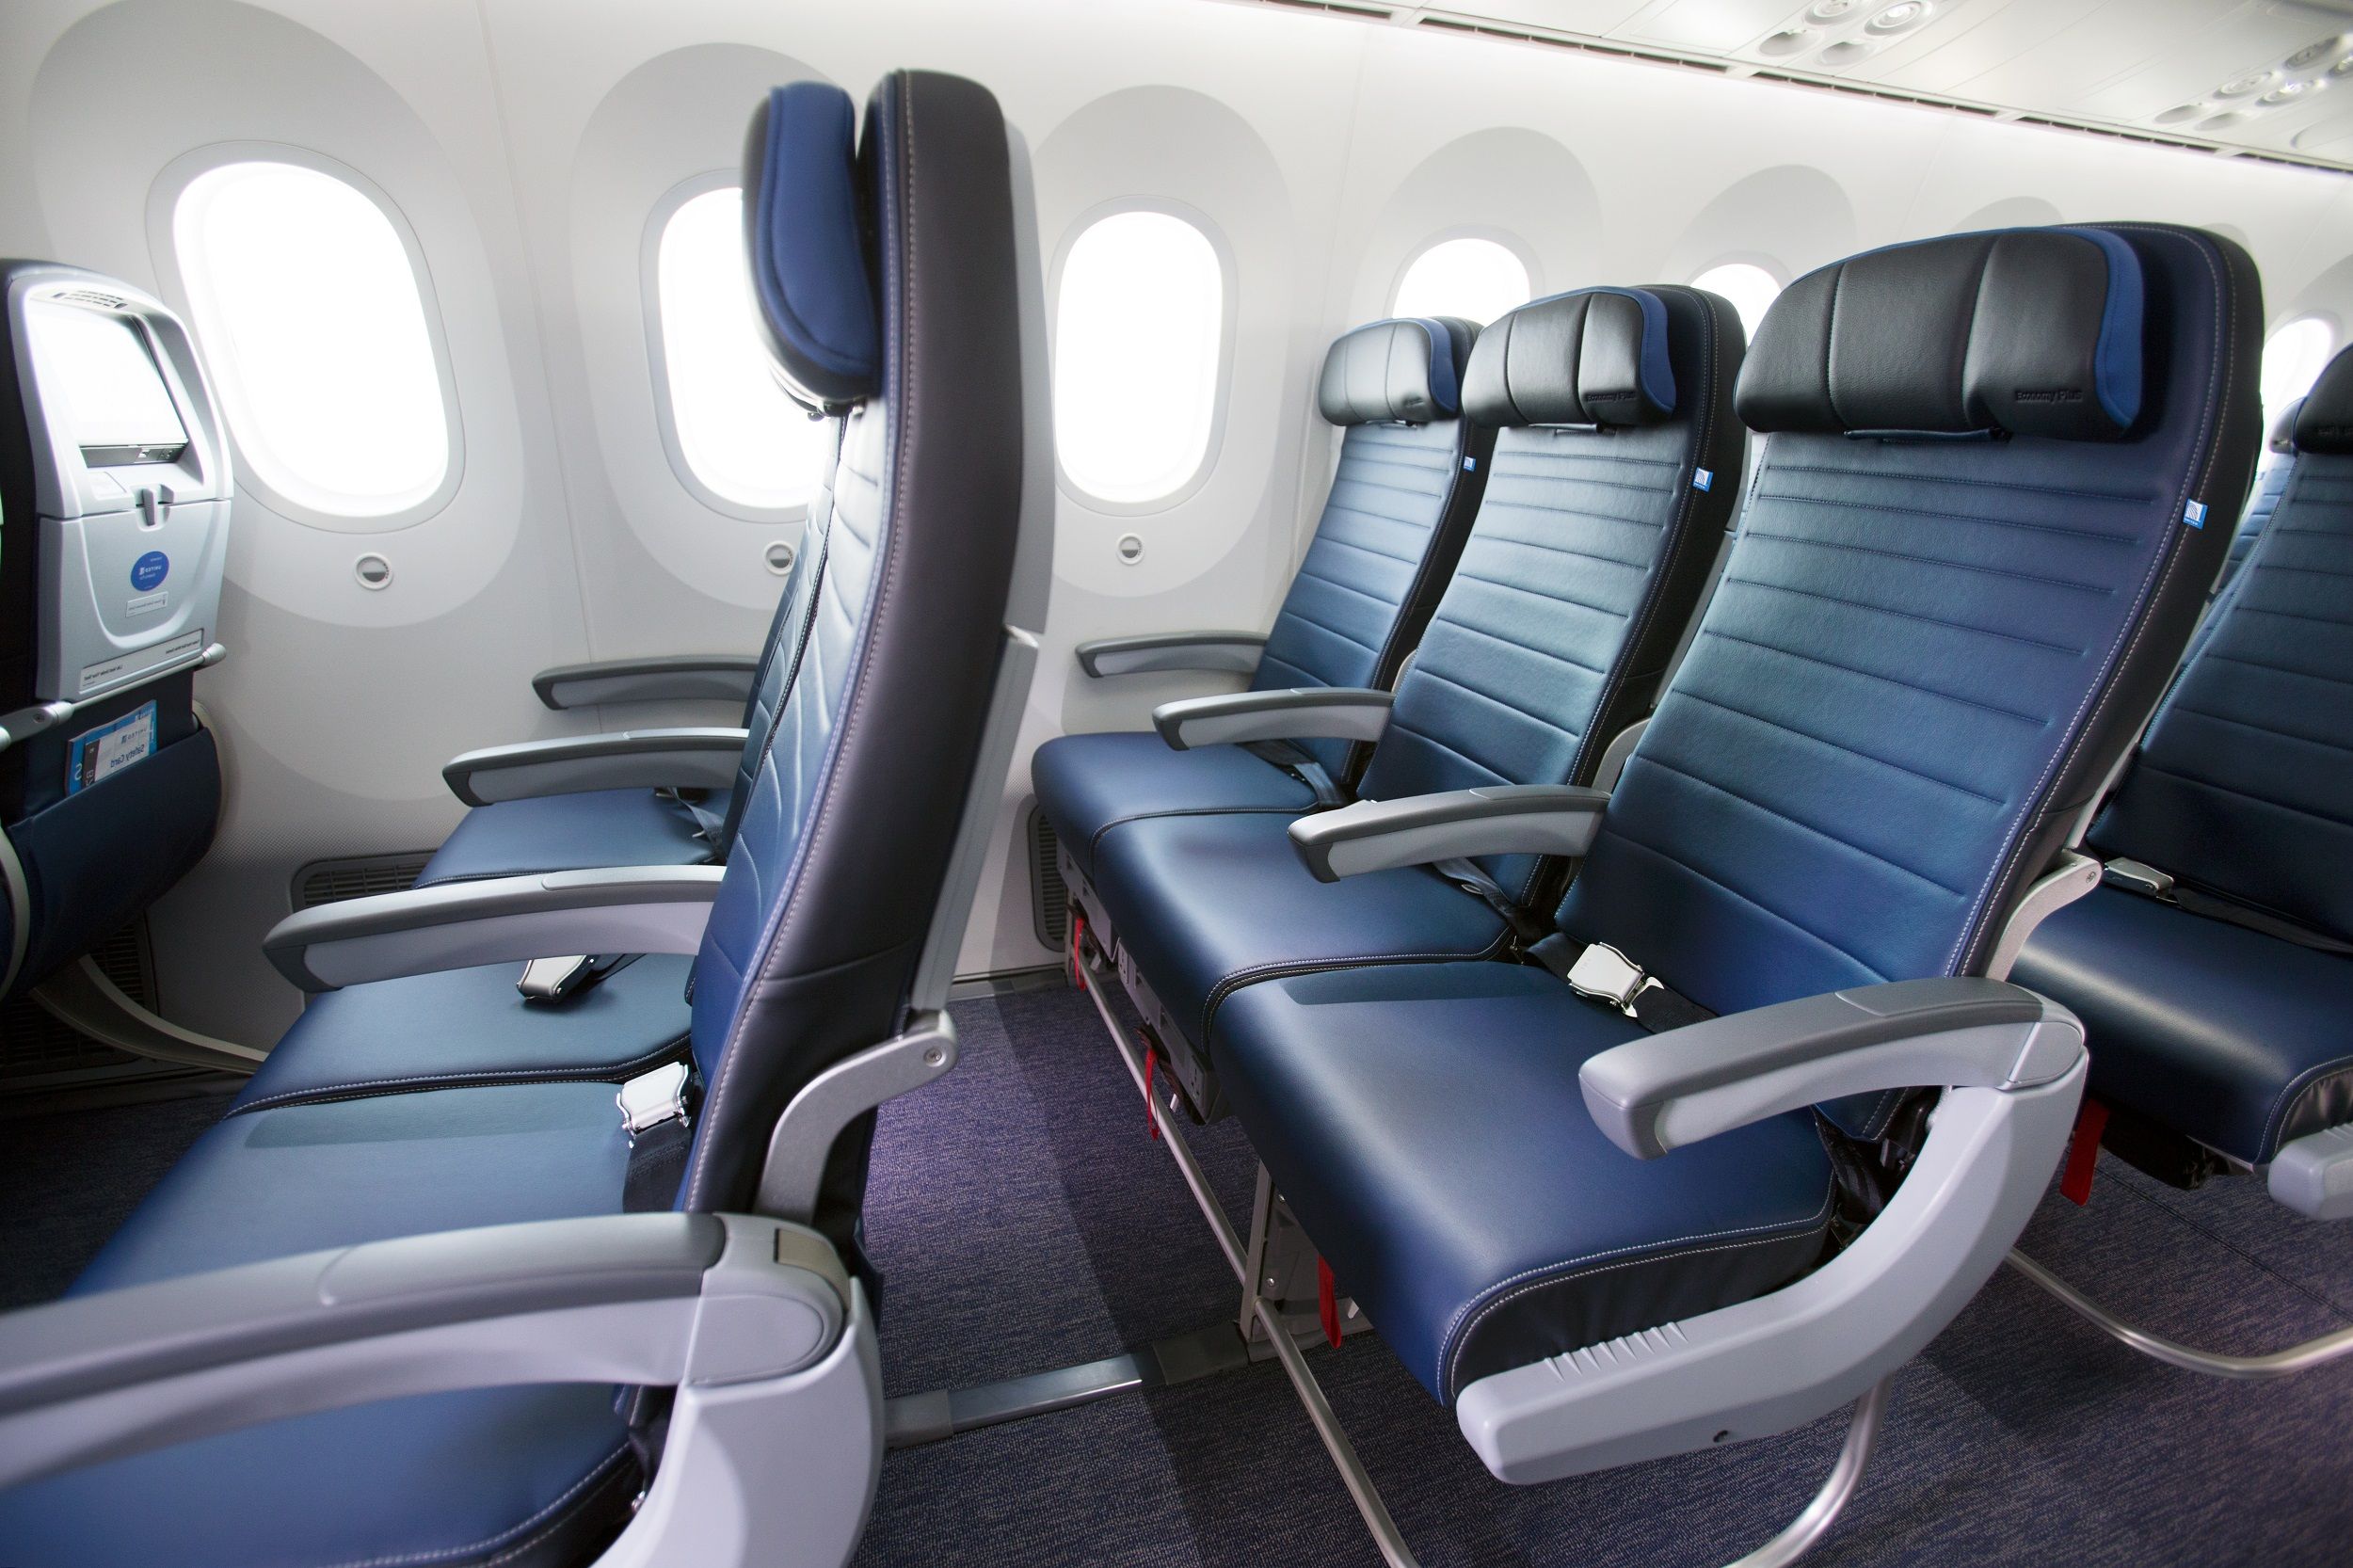 United Economy Plus seats on 787